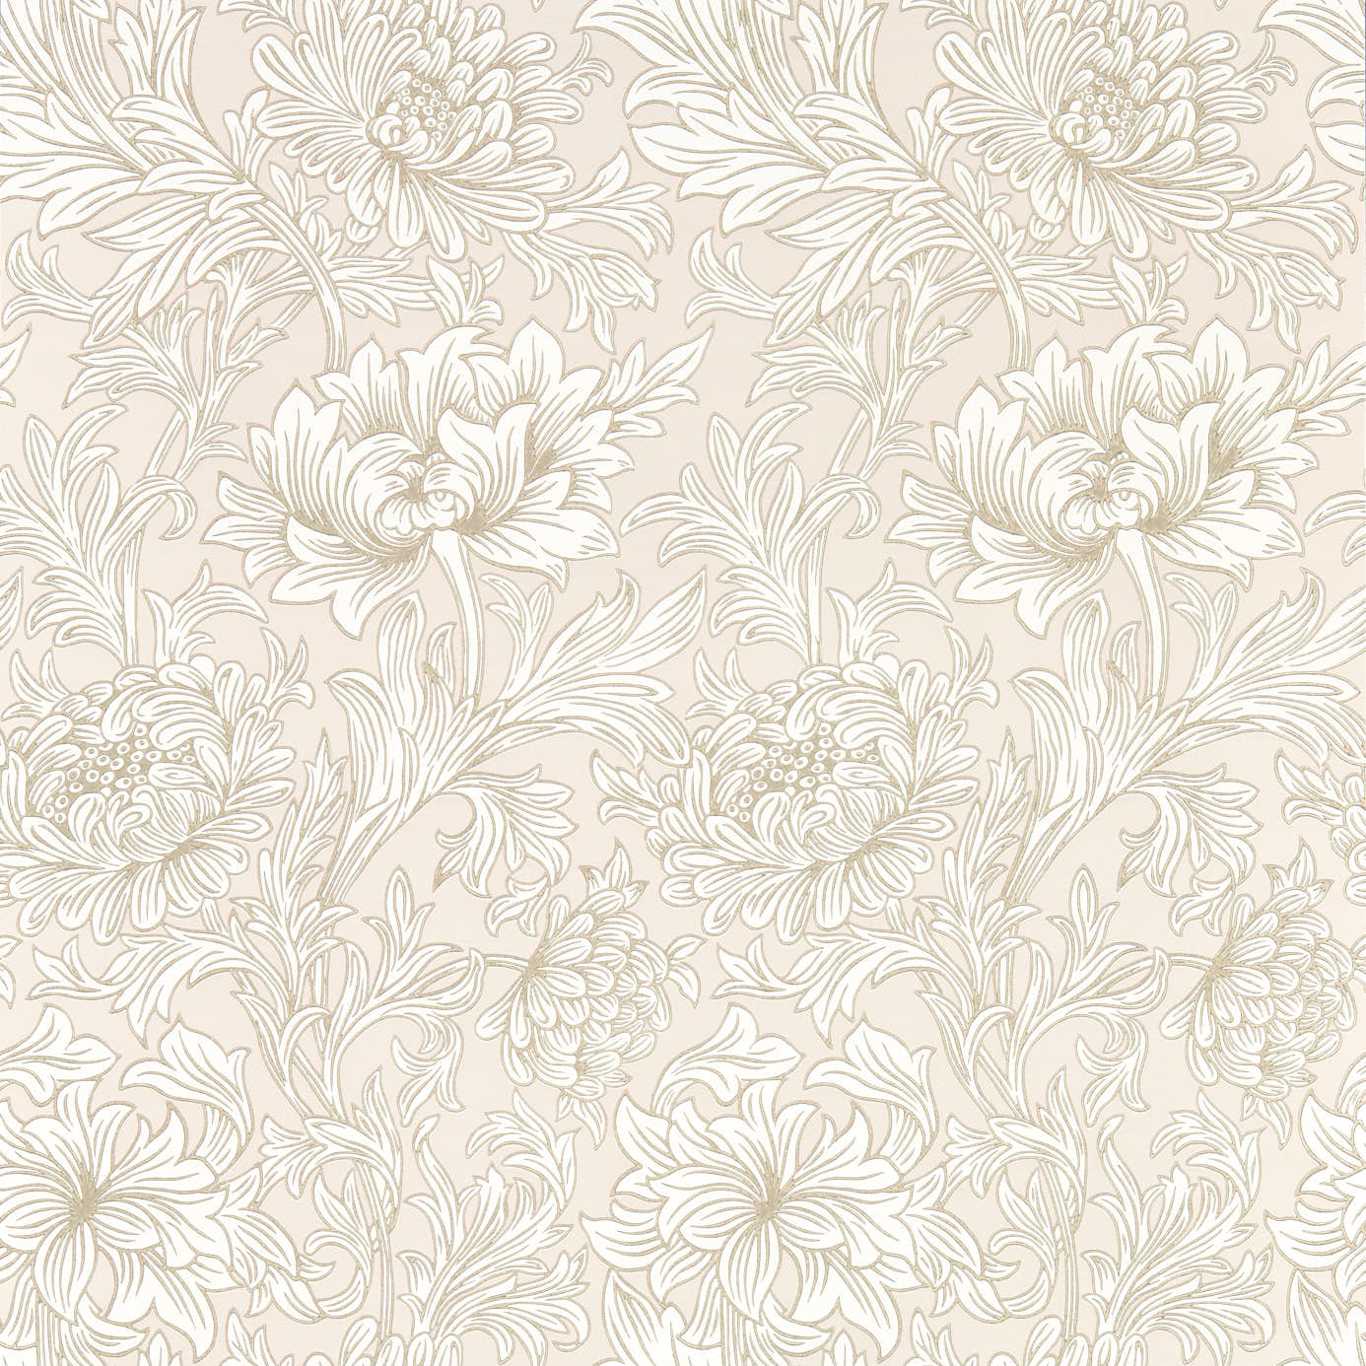 Chrysanthemum Toile Cochineal Pink Wallpaper MSIM217070 by Morris & Co